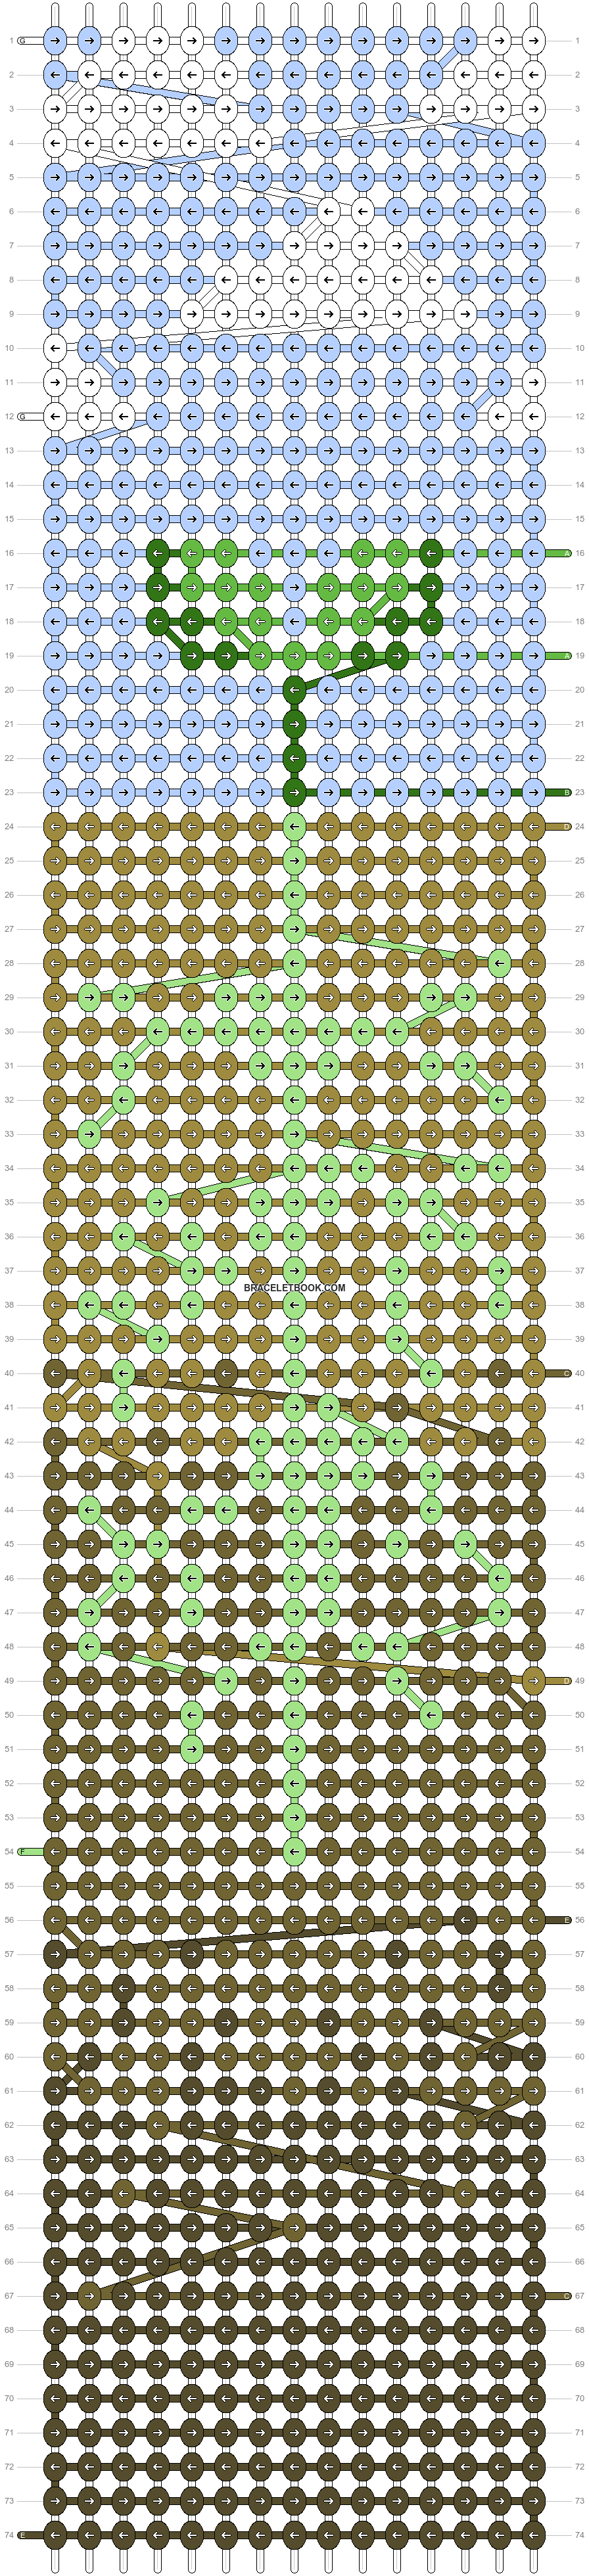 Alpha pattern #53536 pattern